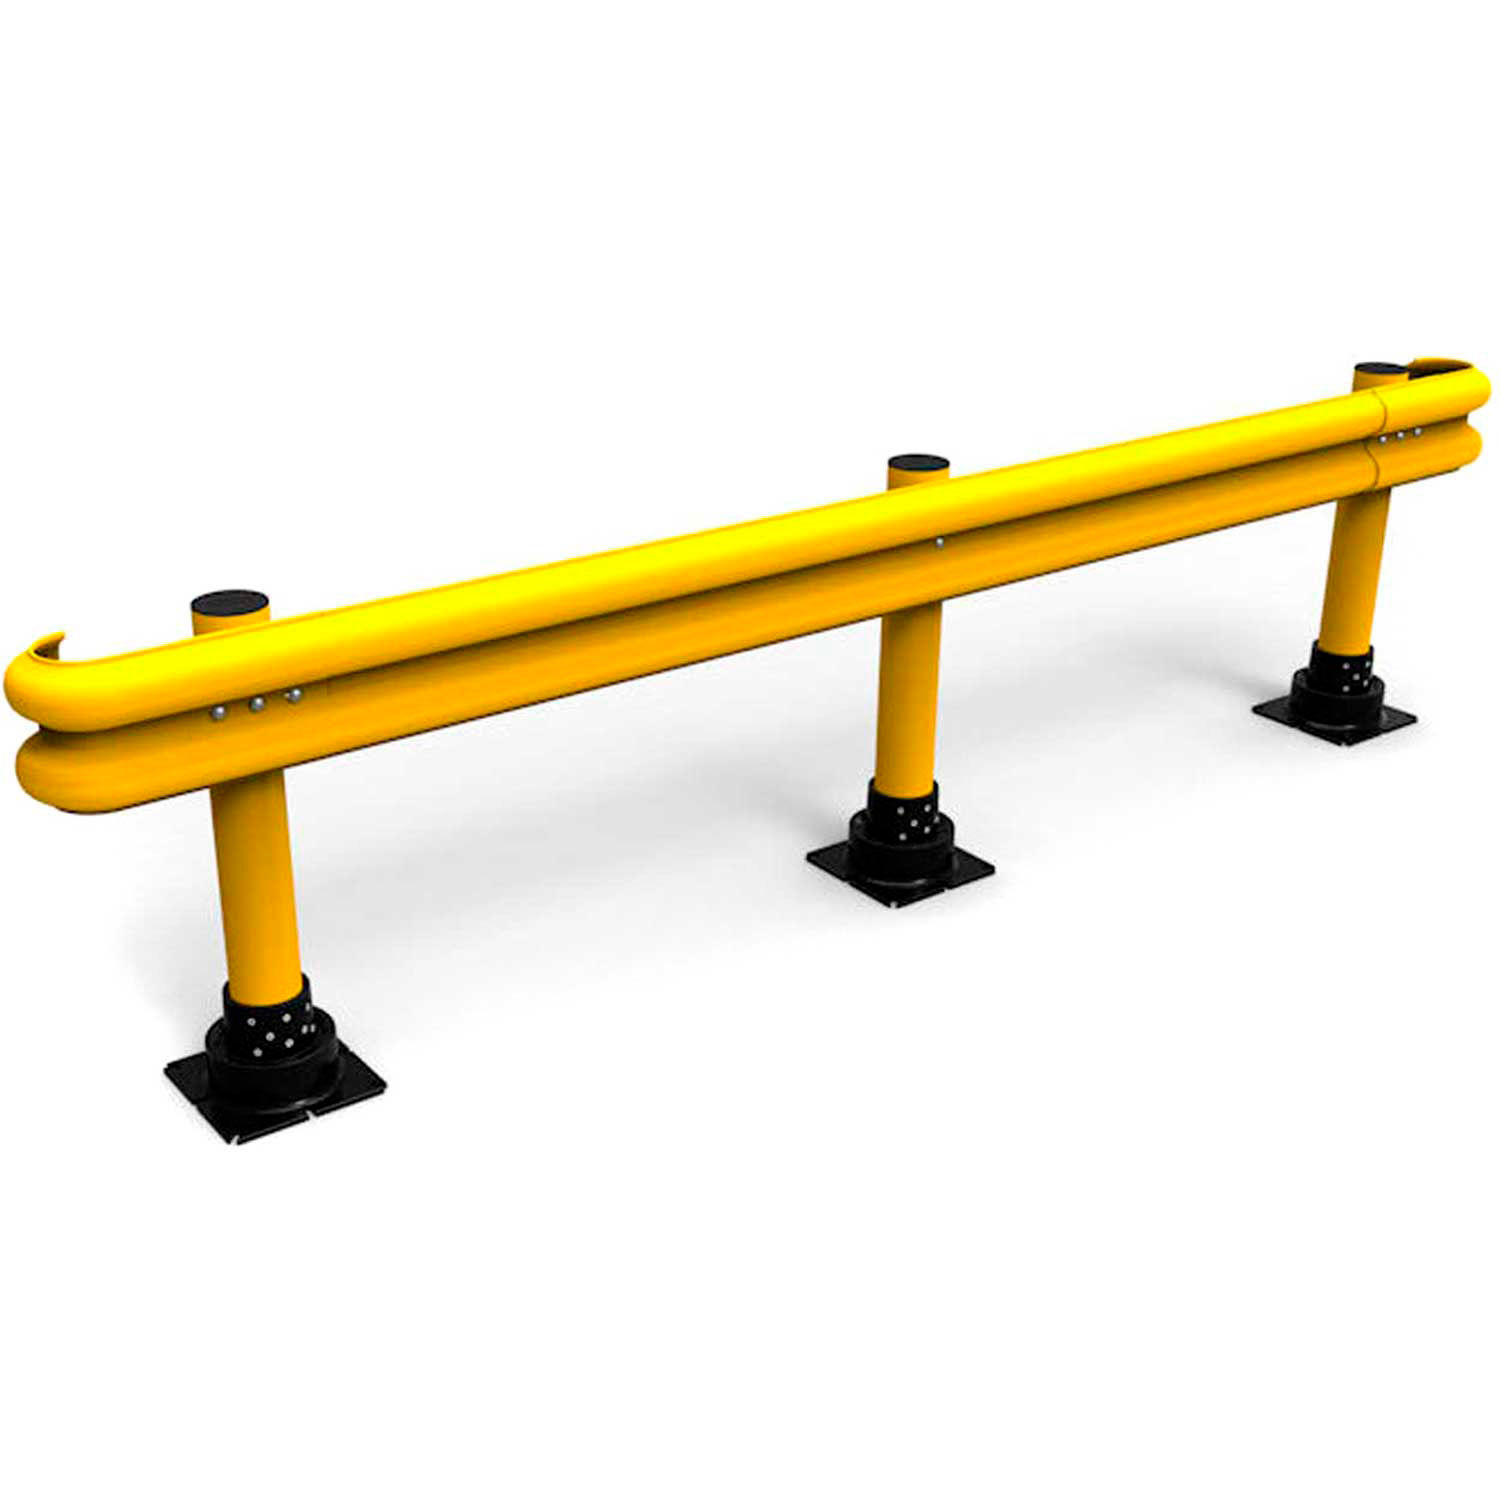 temporary guard rails